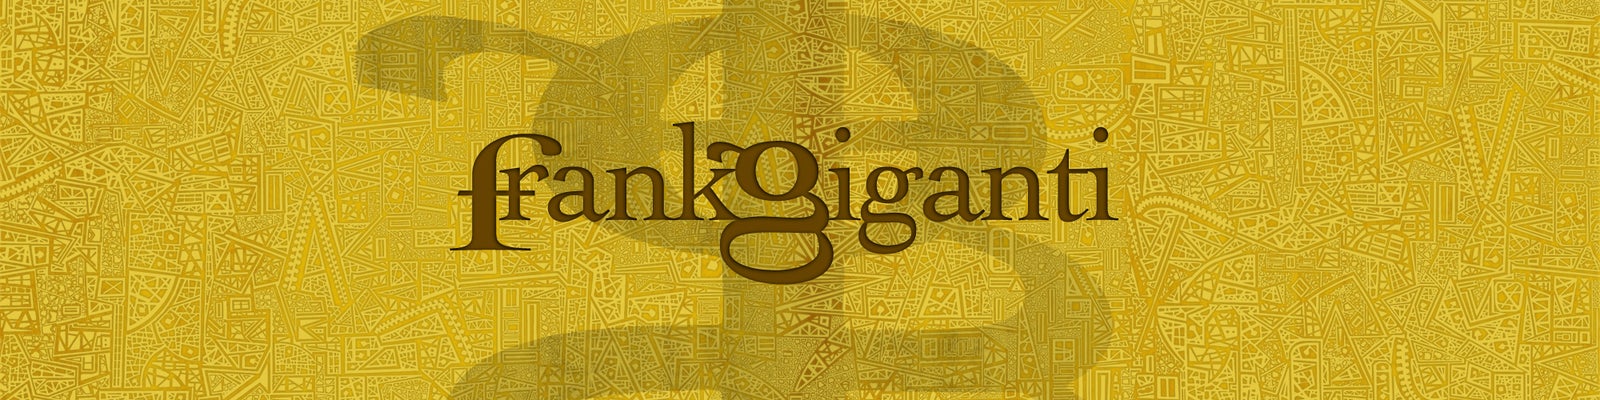 Frank Giganti Co